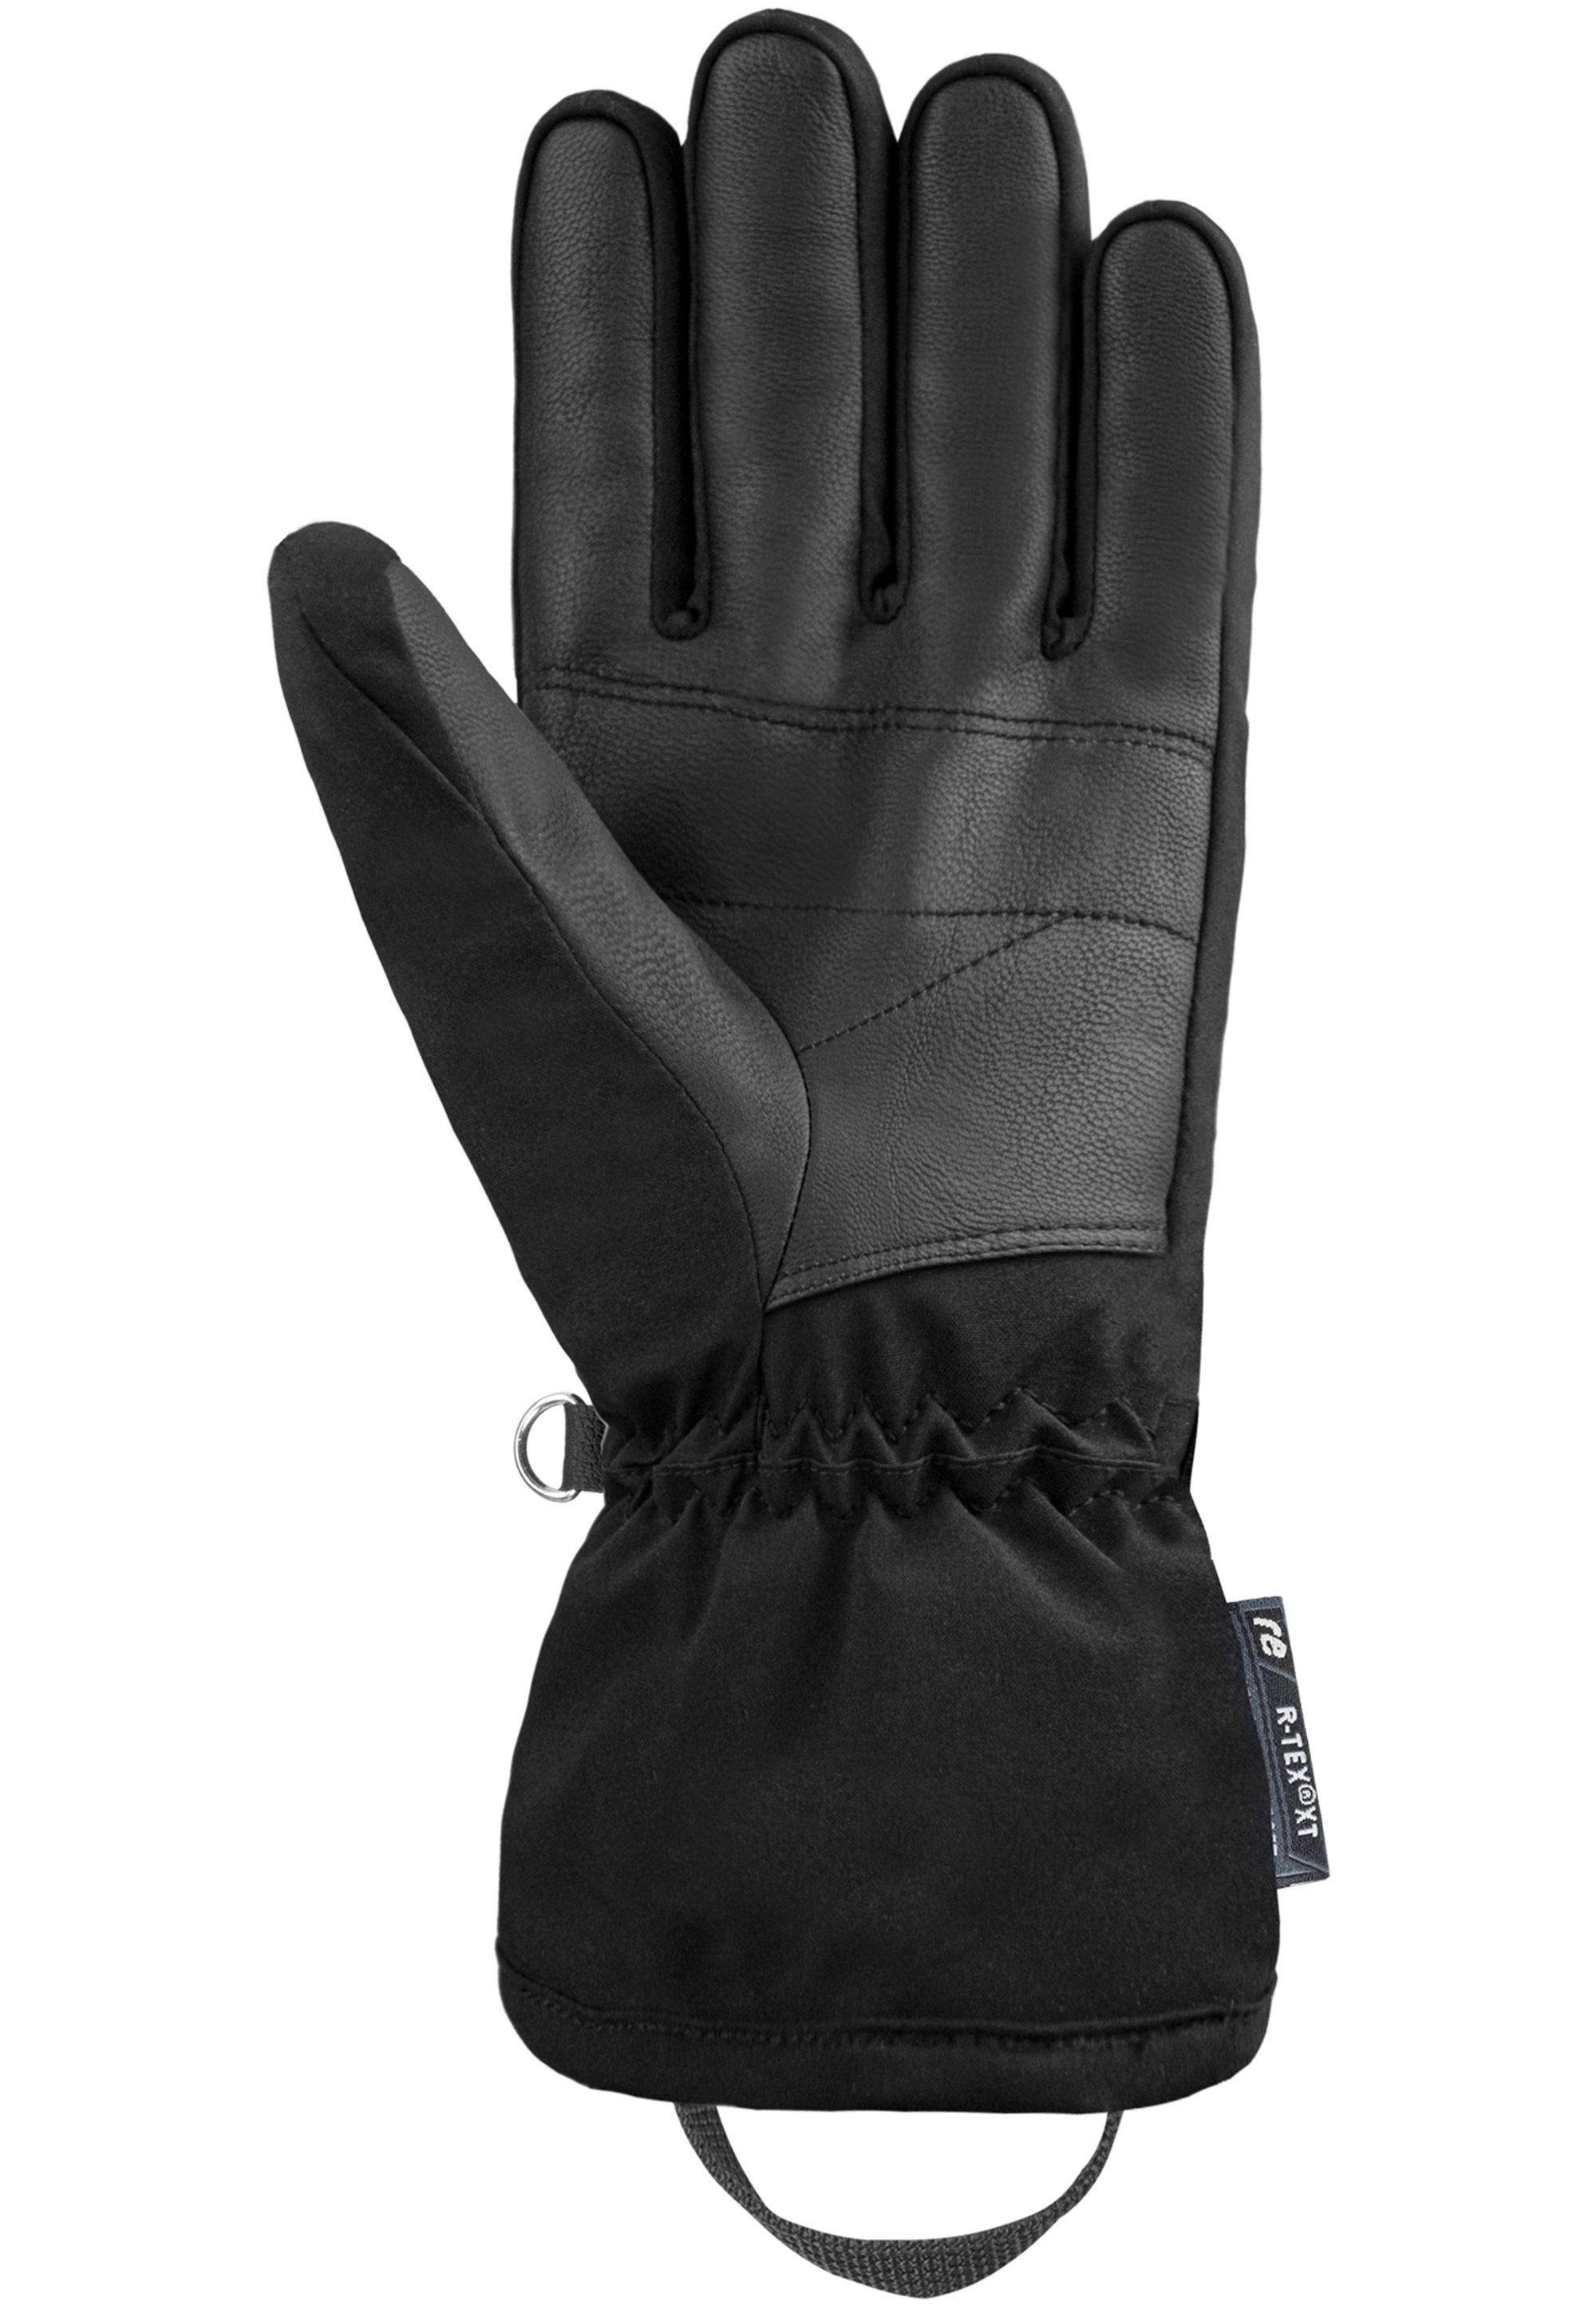 Reusch Helena in schwarz-silberfarben Ausführung R-TEX® Skihandschuhe atmungsaktiver XT extrawarmer, wasserdichter und